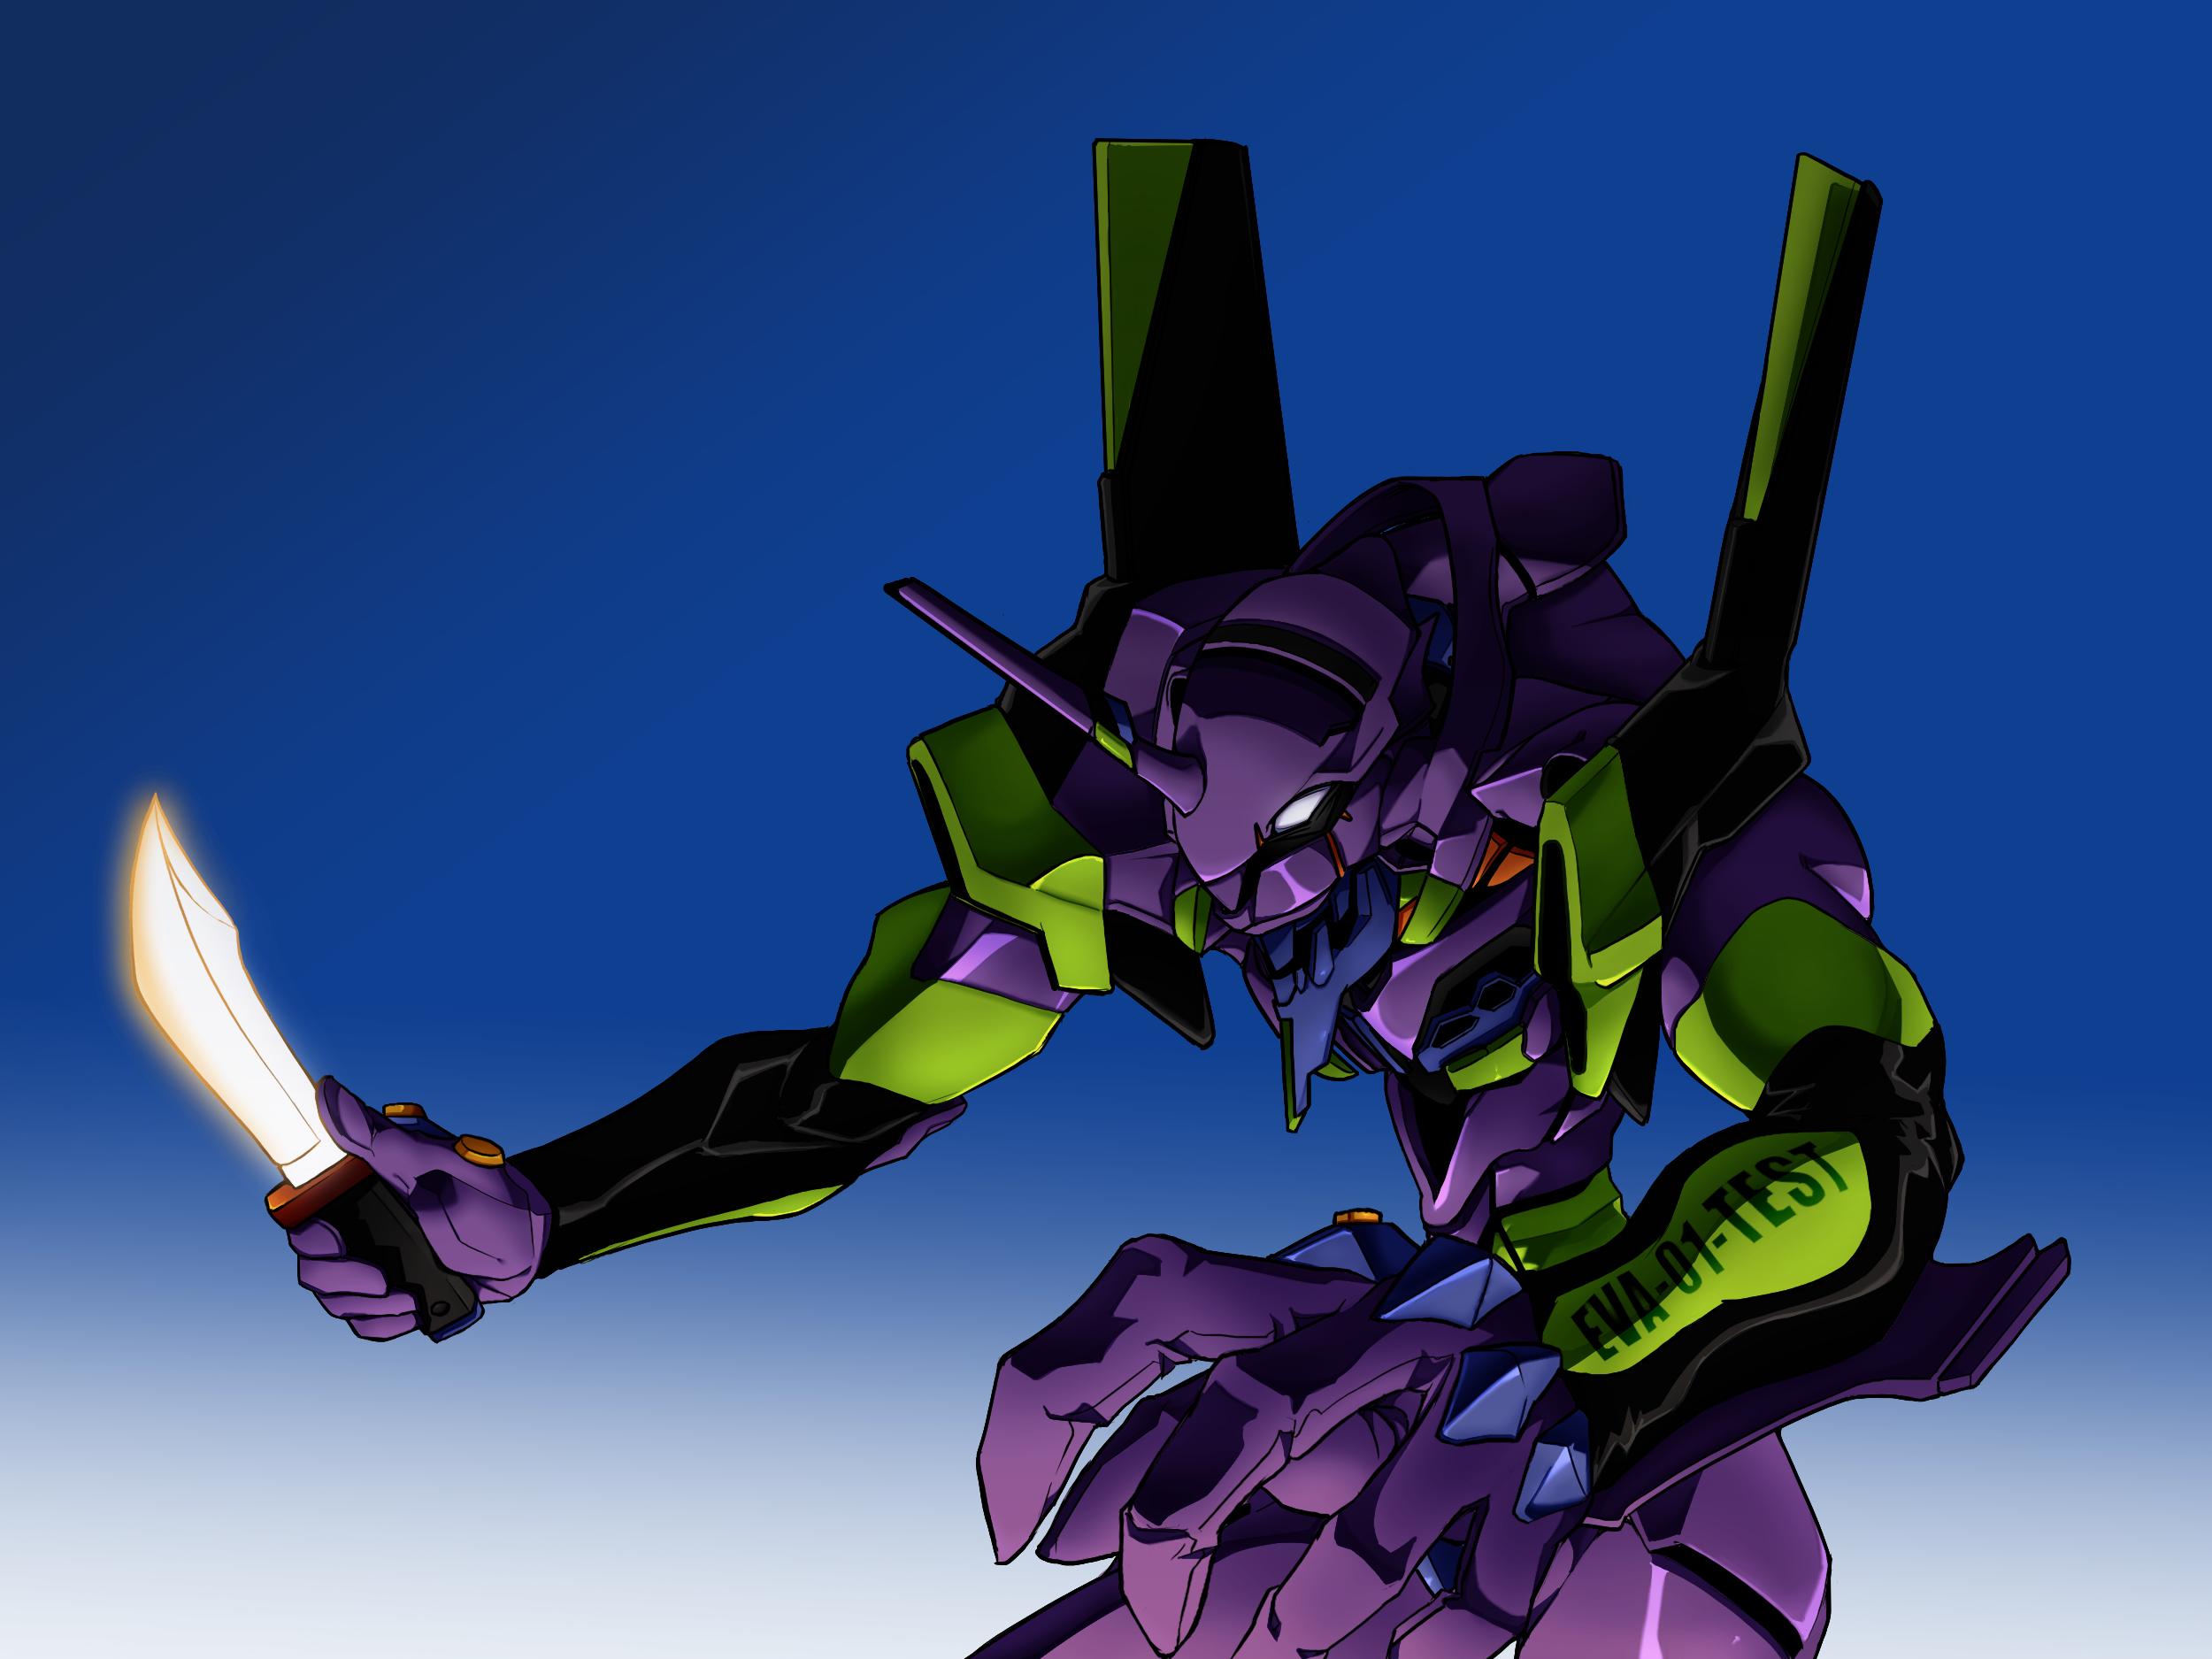 EVA Unit 01 Neon Genesis Evangelion Anime Mechs Super Robot Taisen Artwork Digital Art Fan Art 2500x1875